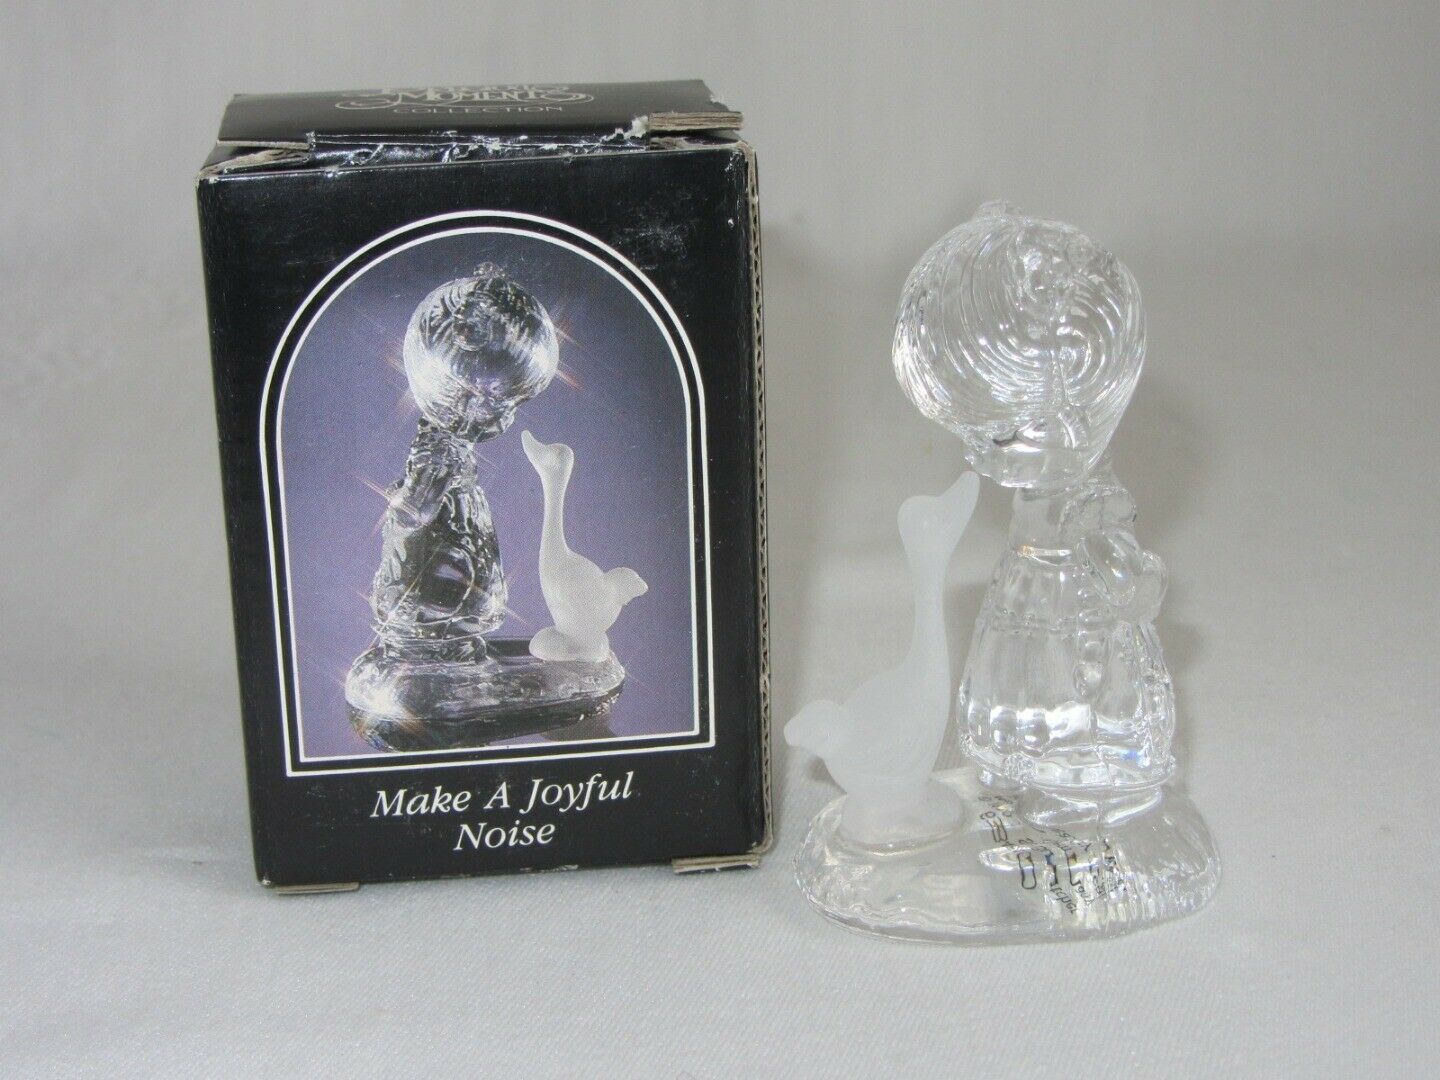 Primary image for Precious Moments Lead Crystal Figurine Make A Joyful Noise 1990 634840